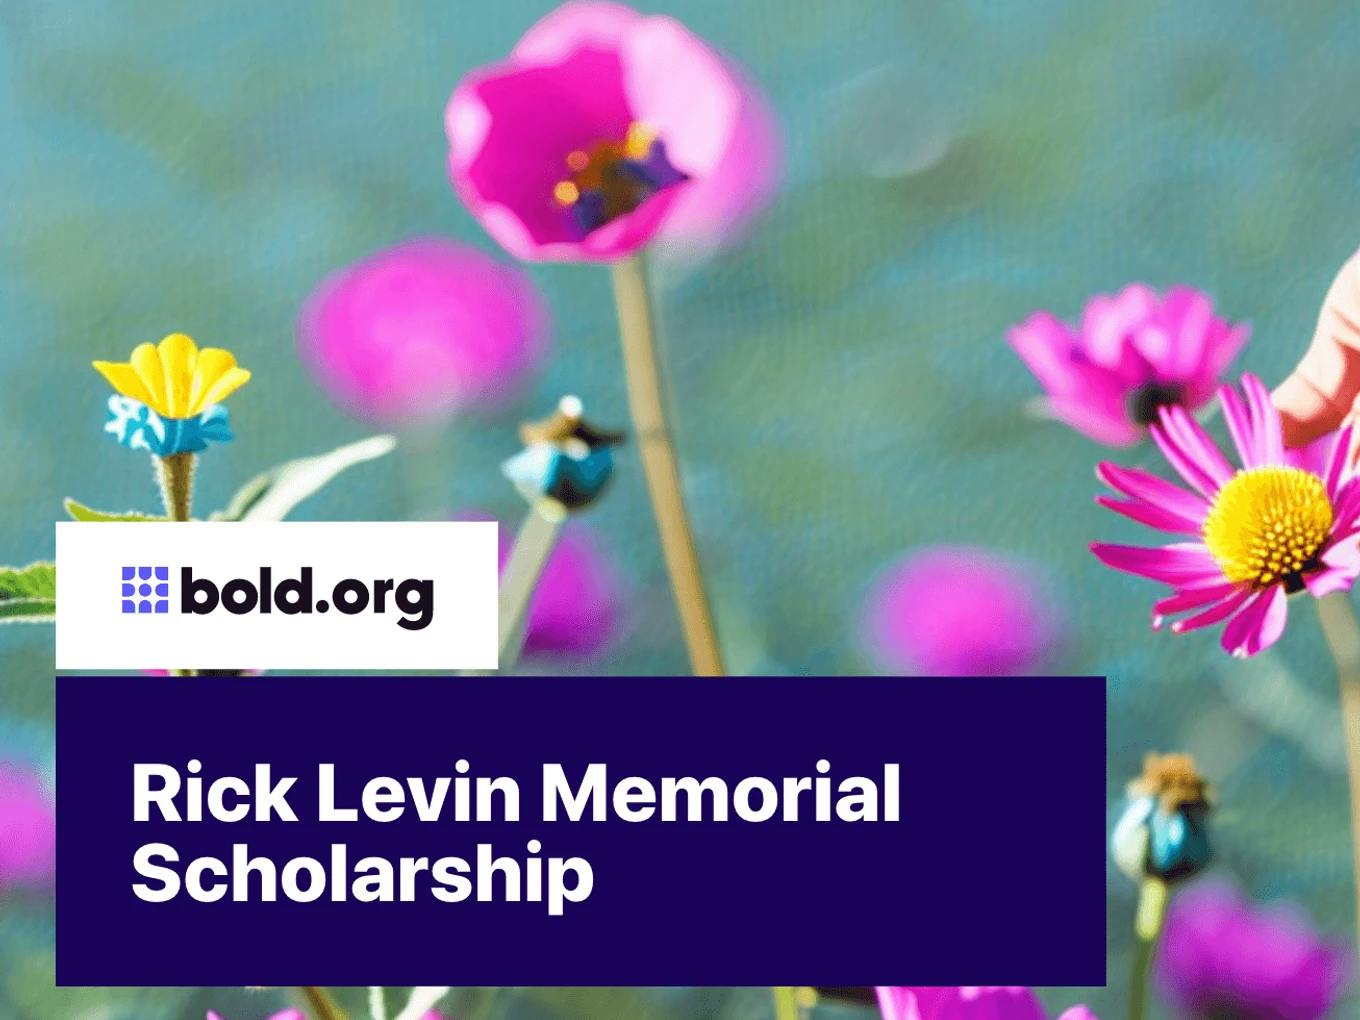 Rick Levin Memorial Scholarship